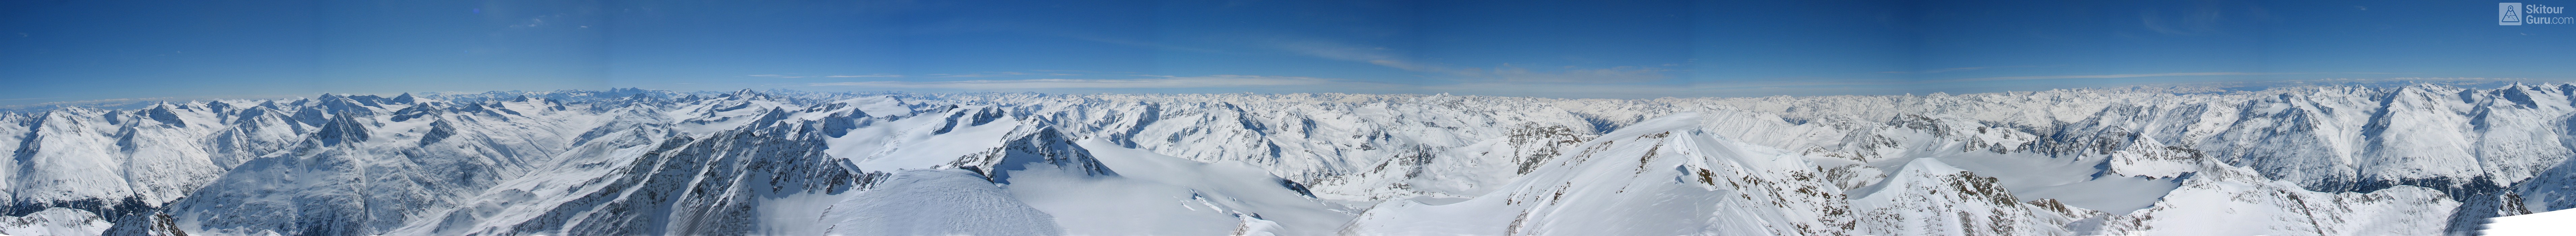 Wildspize W - Vernagt Hütte Ötztaler Alpen / Alpi Venoste Rakousko panorama 32